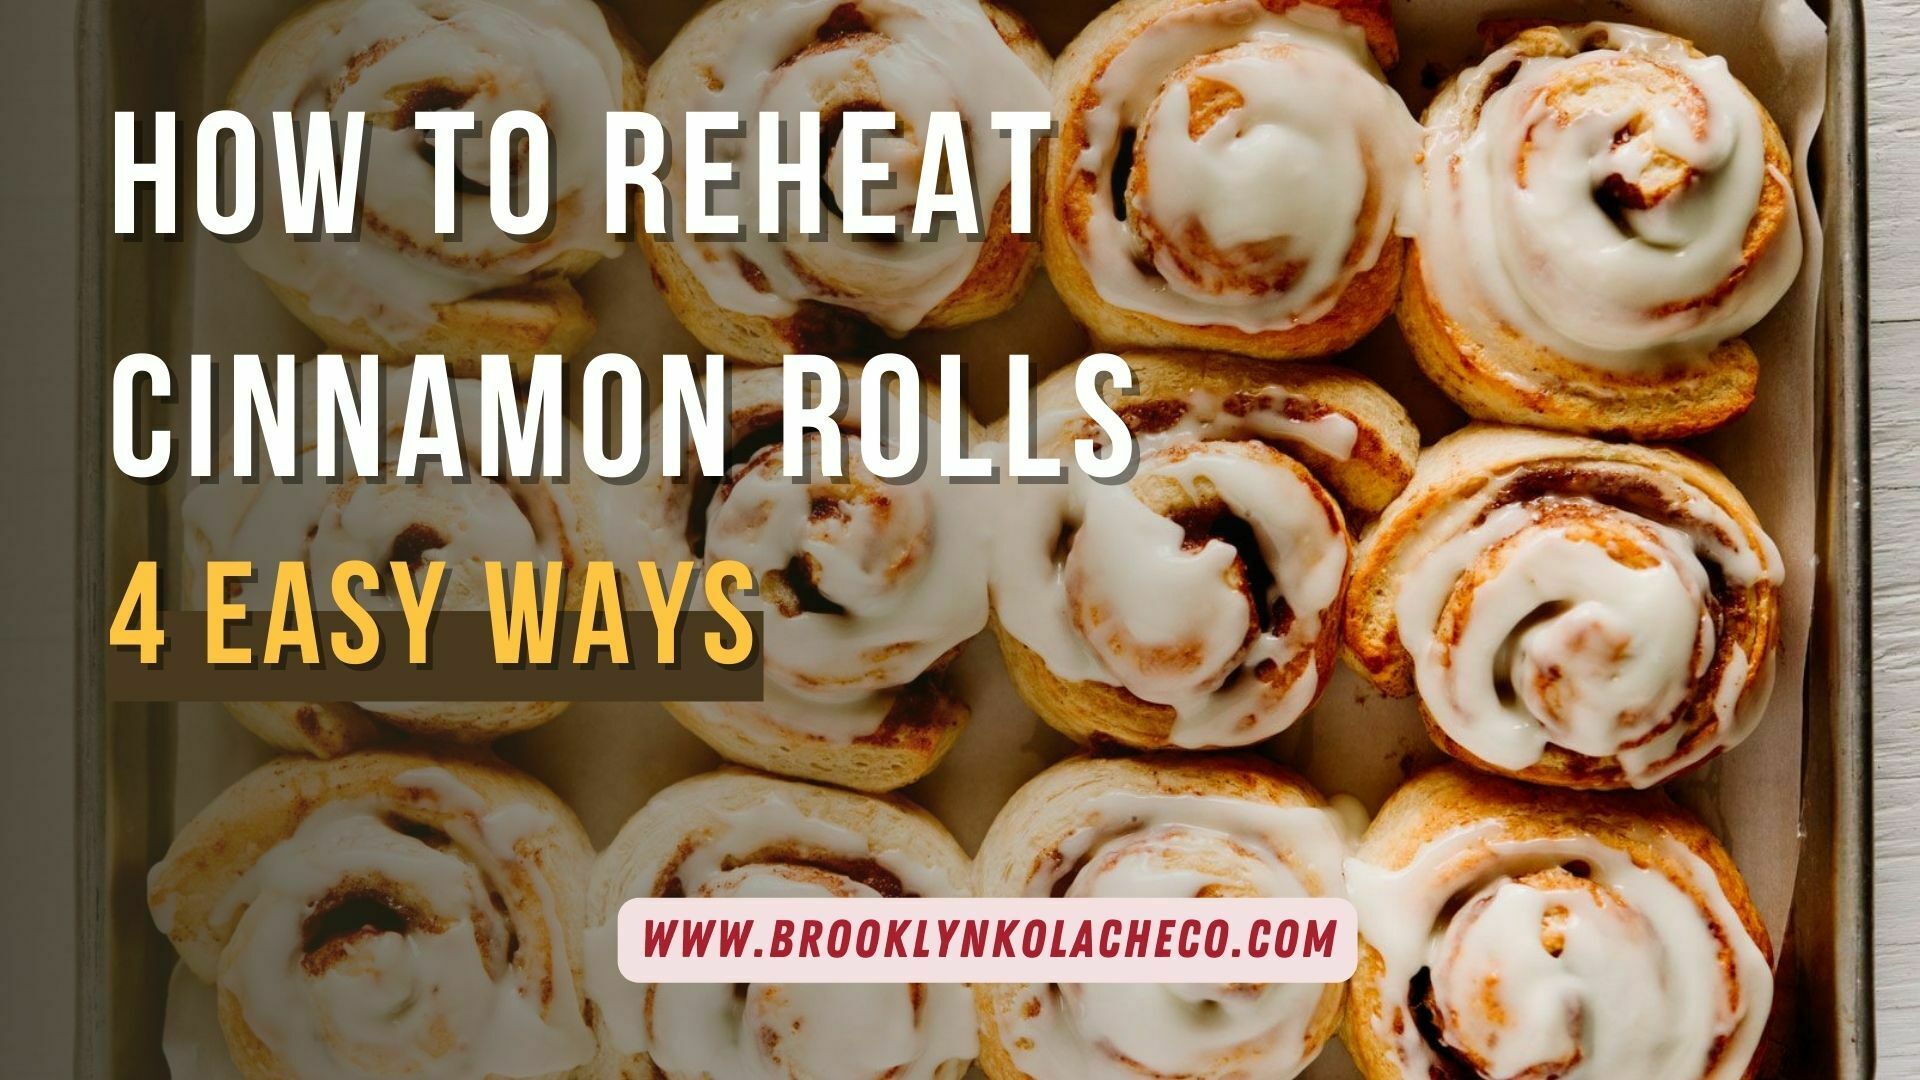 How To Reheat Cinnamon Rolls – The 4 Easy Ways